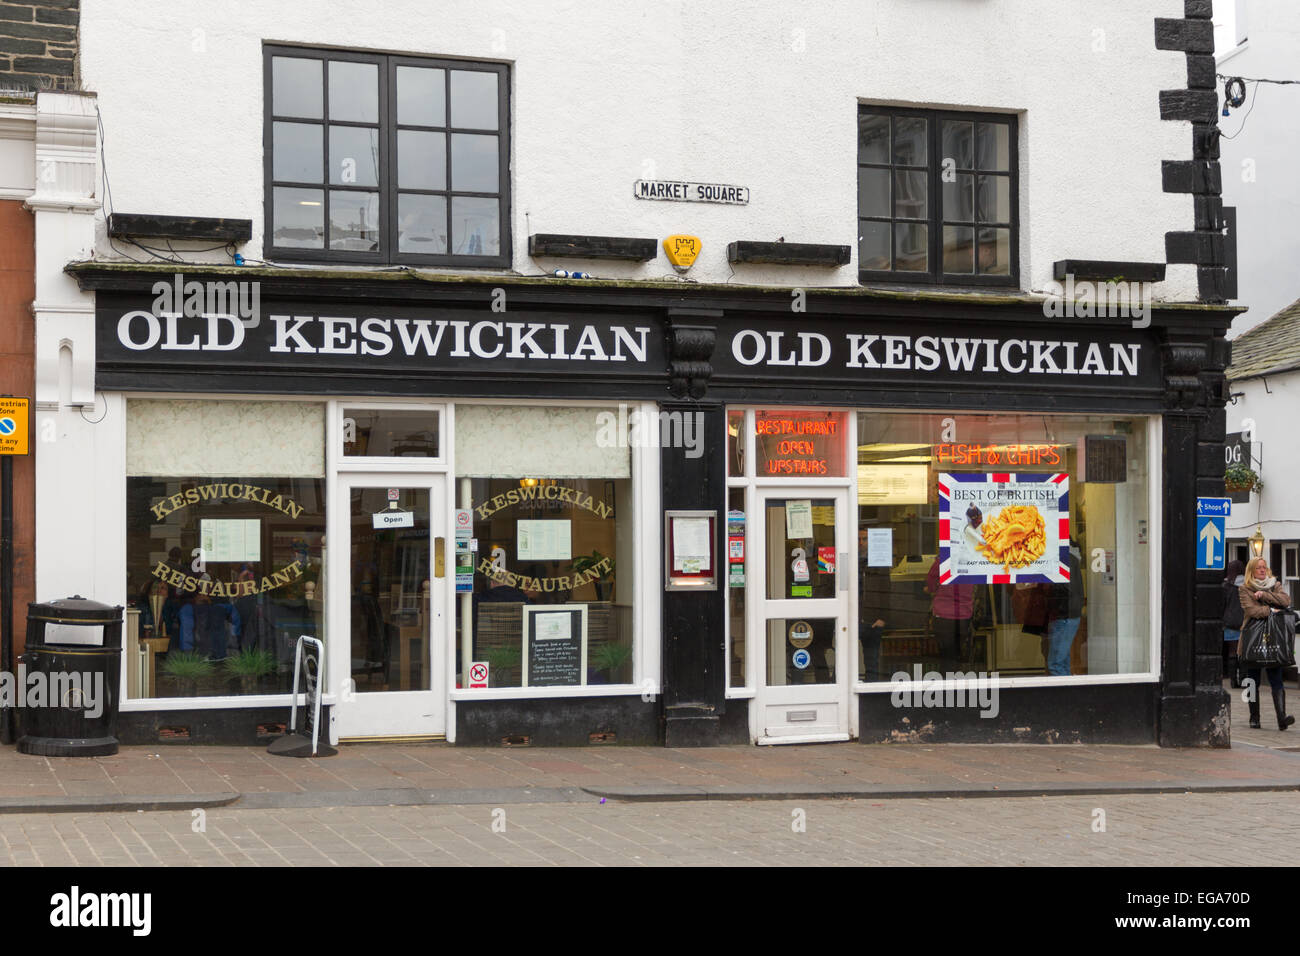 Old Keswickian Fish and Chip shop in Keswick, Cumbria Stock Photo